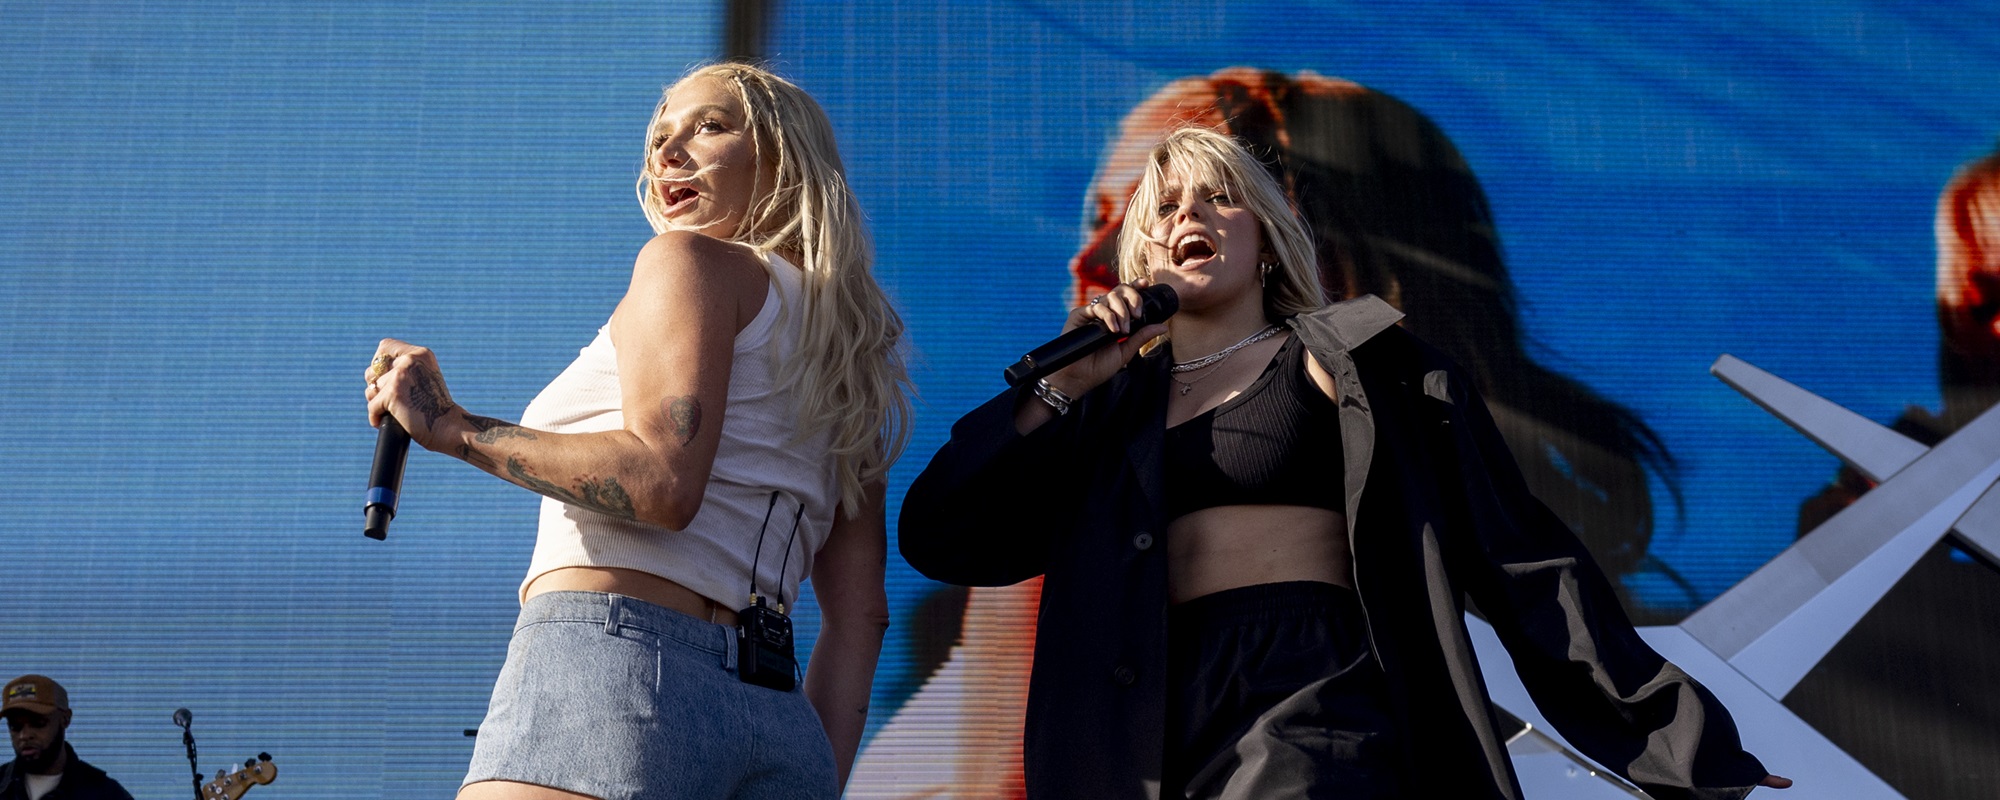 Kesha to Permanently Change Lyric About Diddy in “Tik Tok”